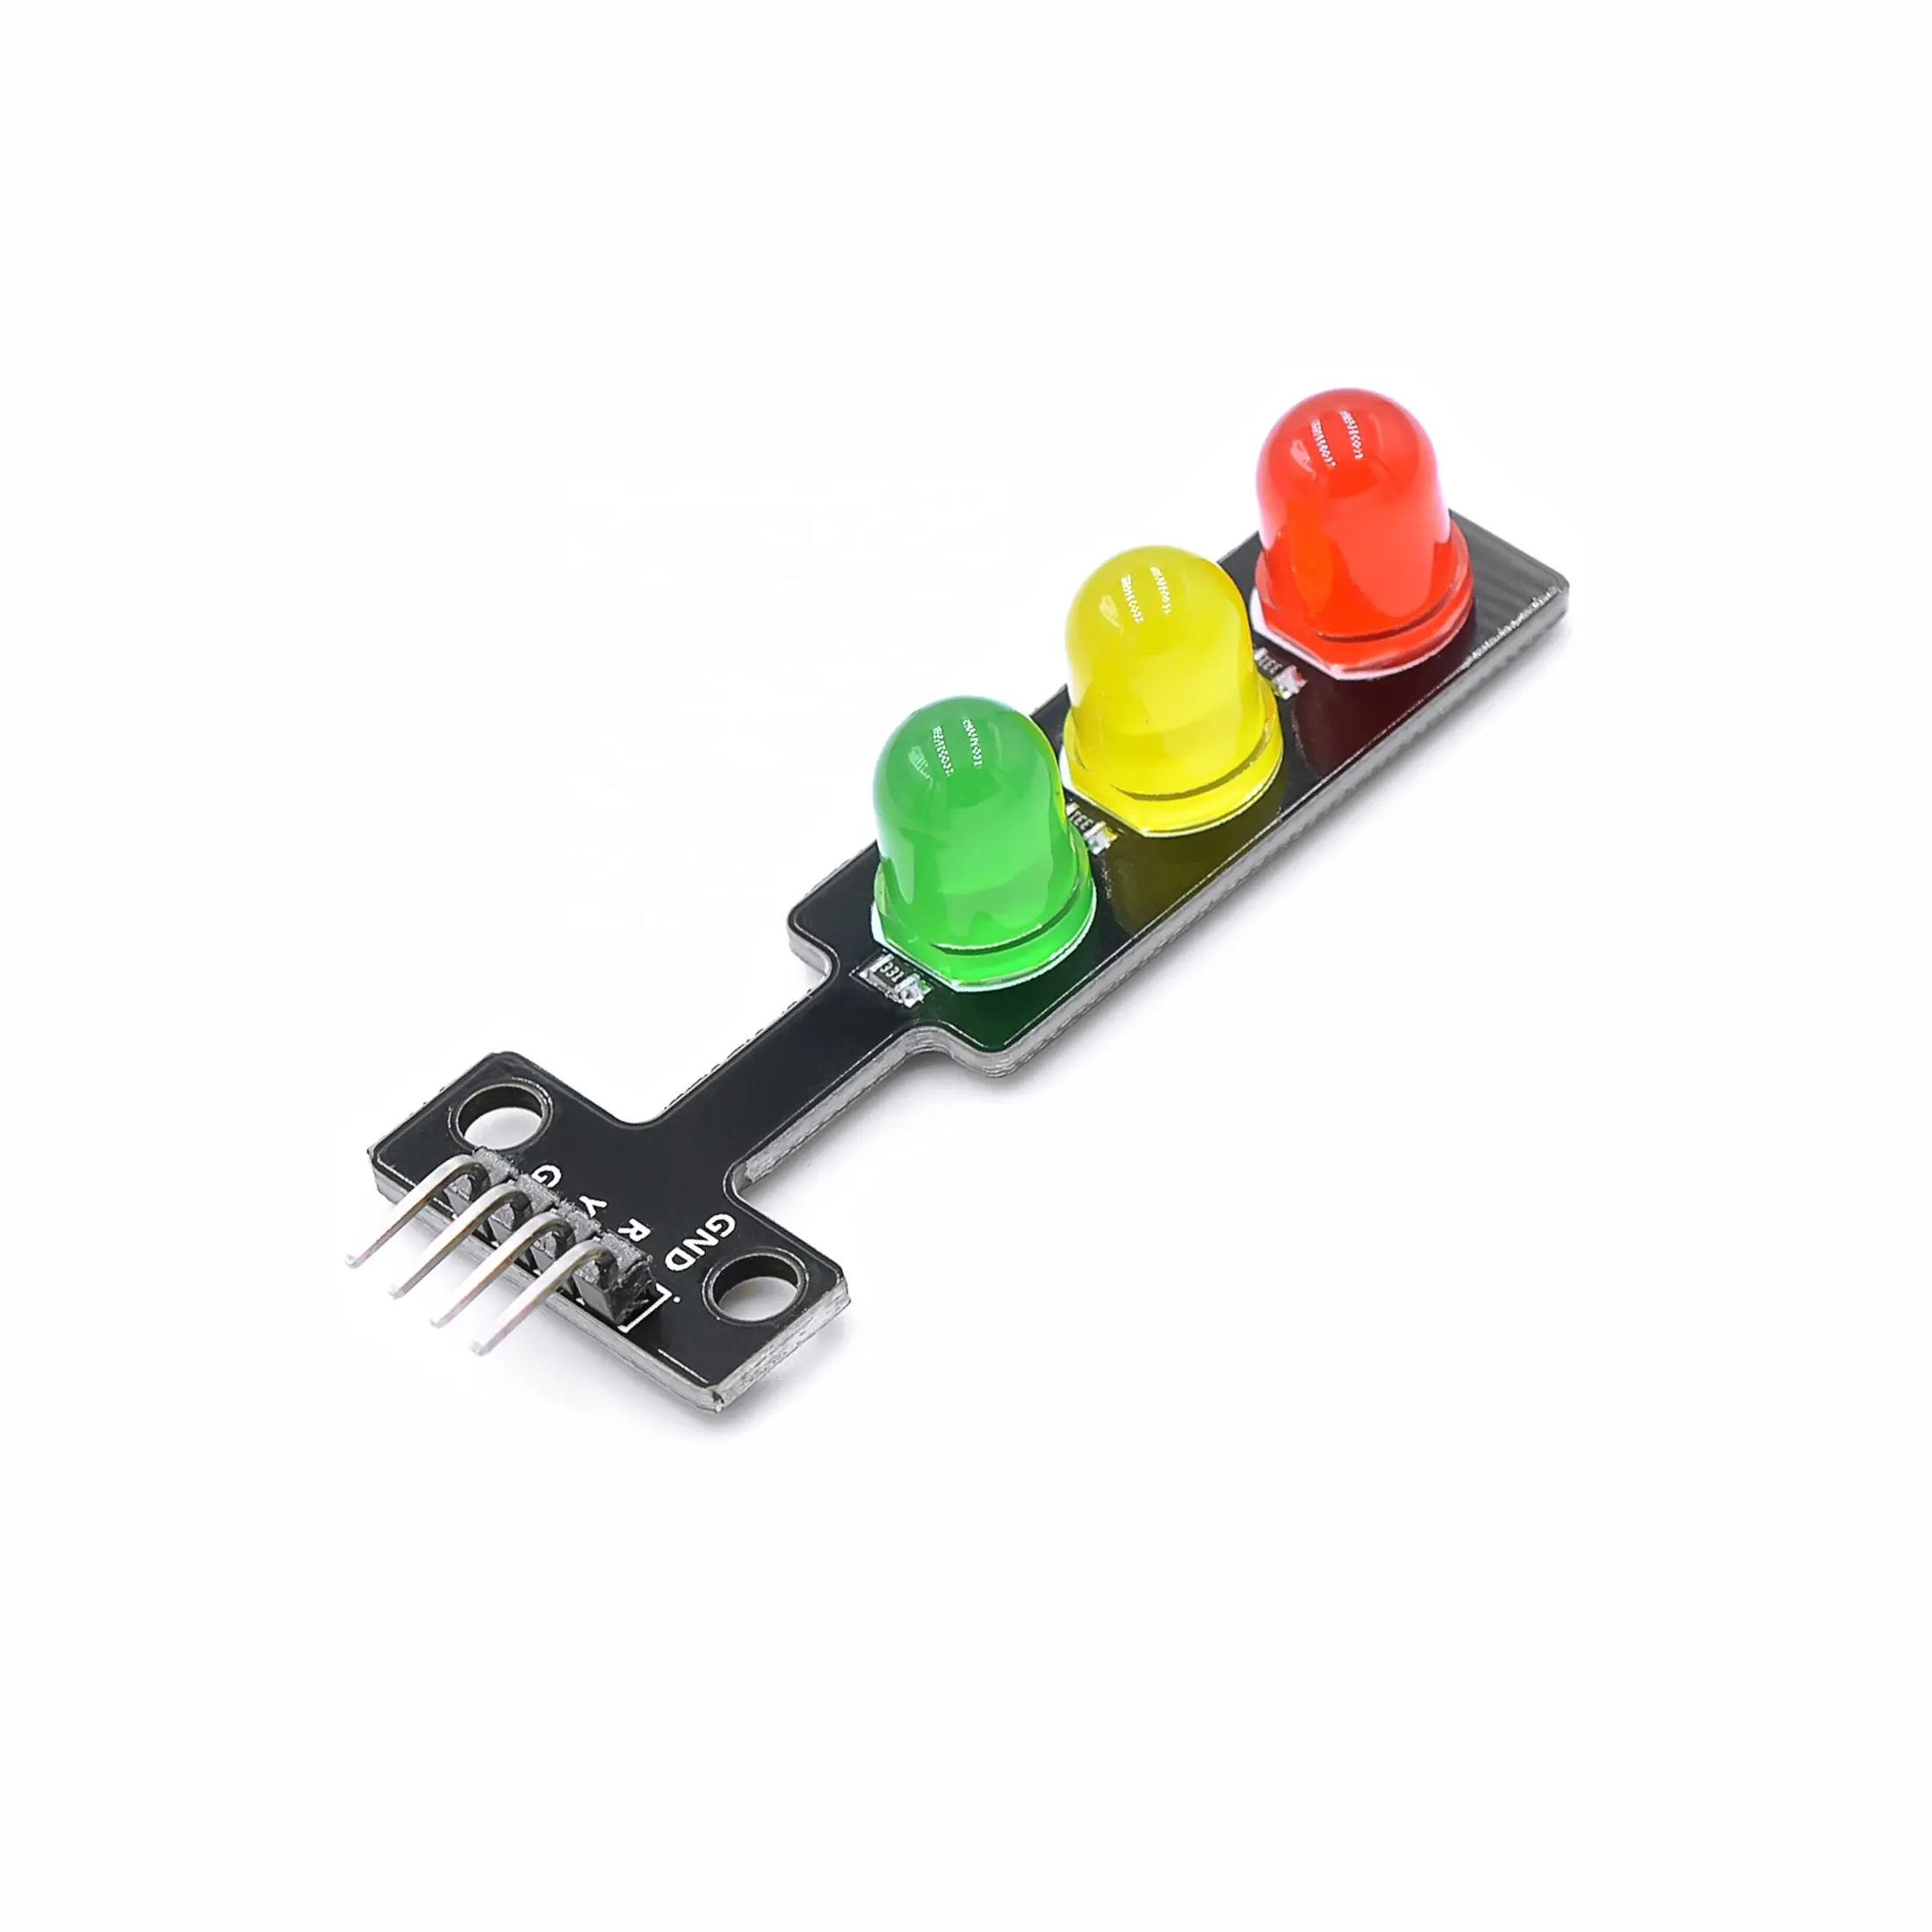 5V traffic light module, Electronic Learning Building Block Programming, Single Control Board LED traffic lights